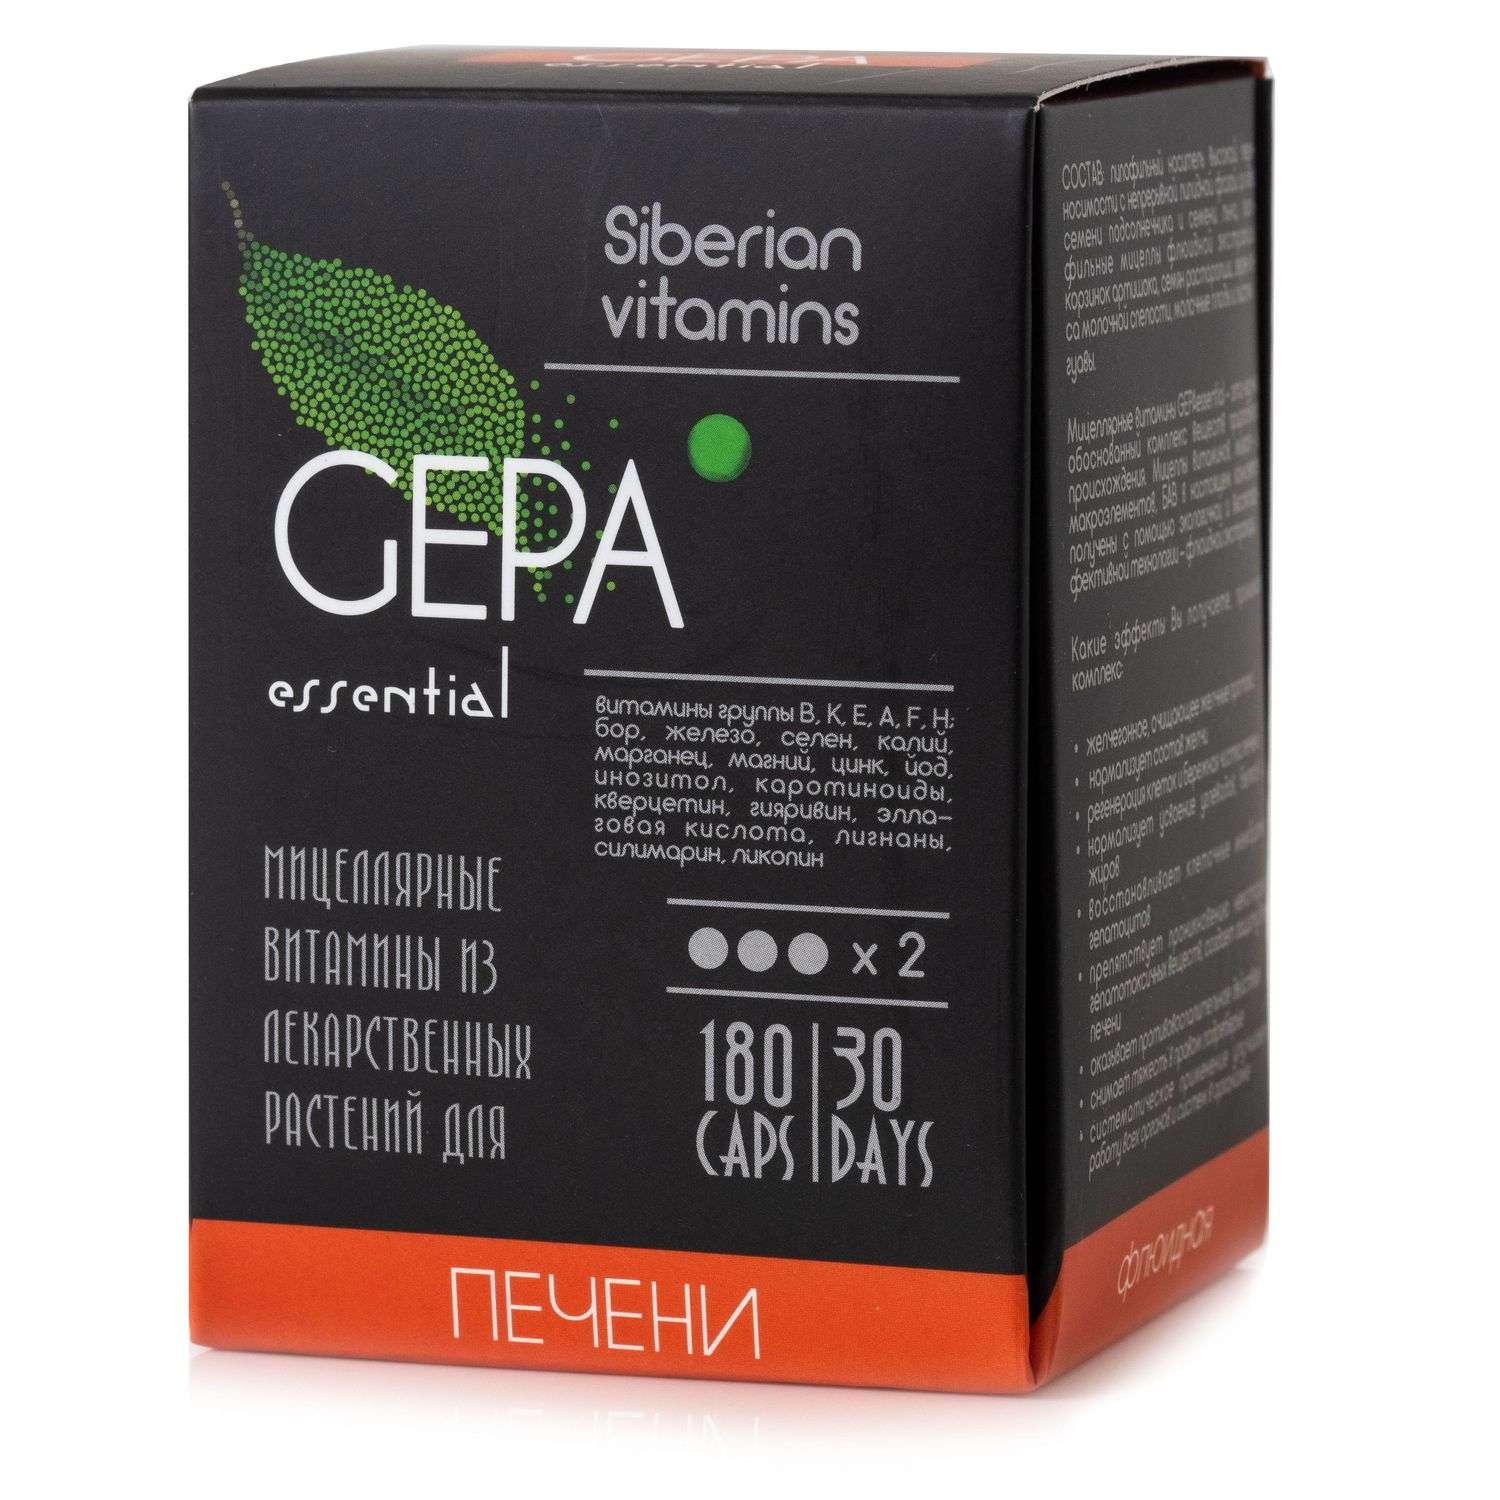 Экстракт масел Сиб-КруК Siberian Vitamins GepaEssential для печени 180капсул - фото 1